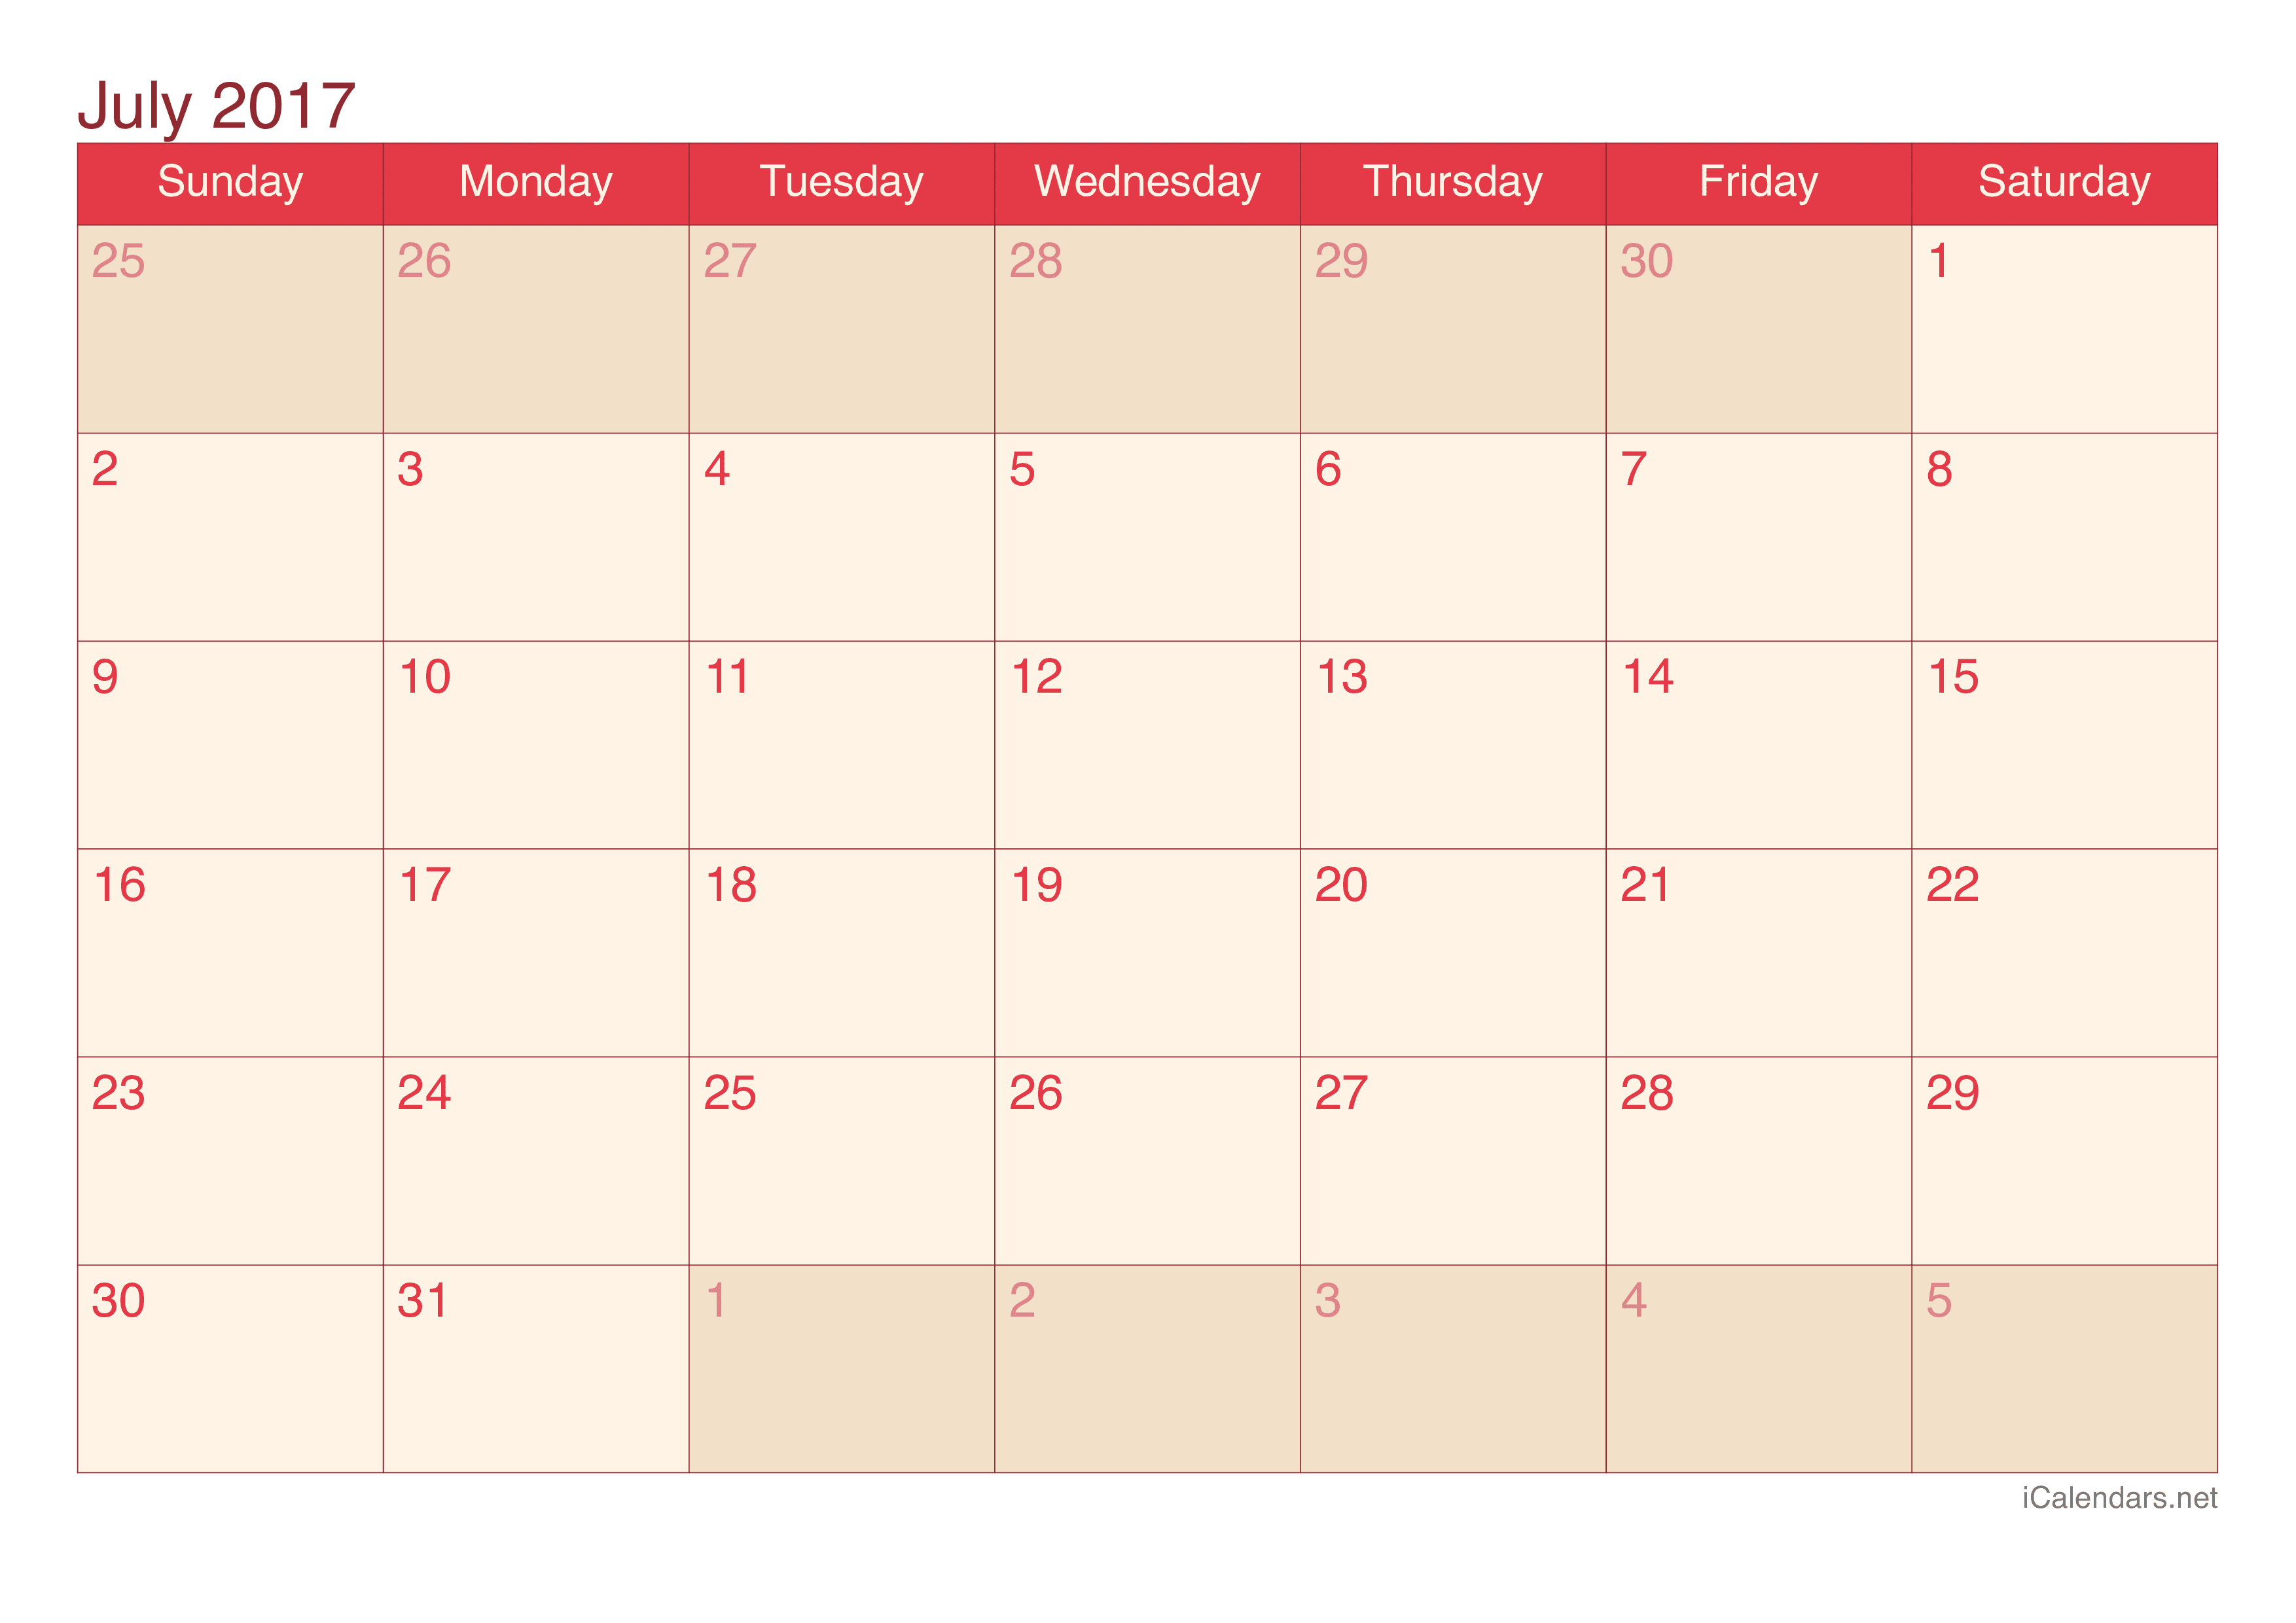 2017 July Calendar - Cherry